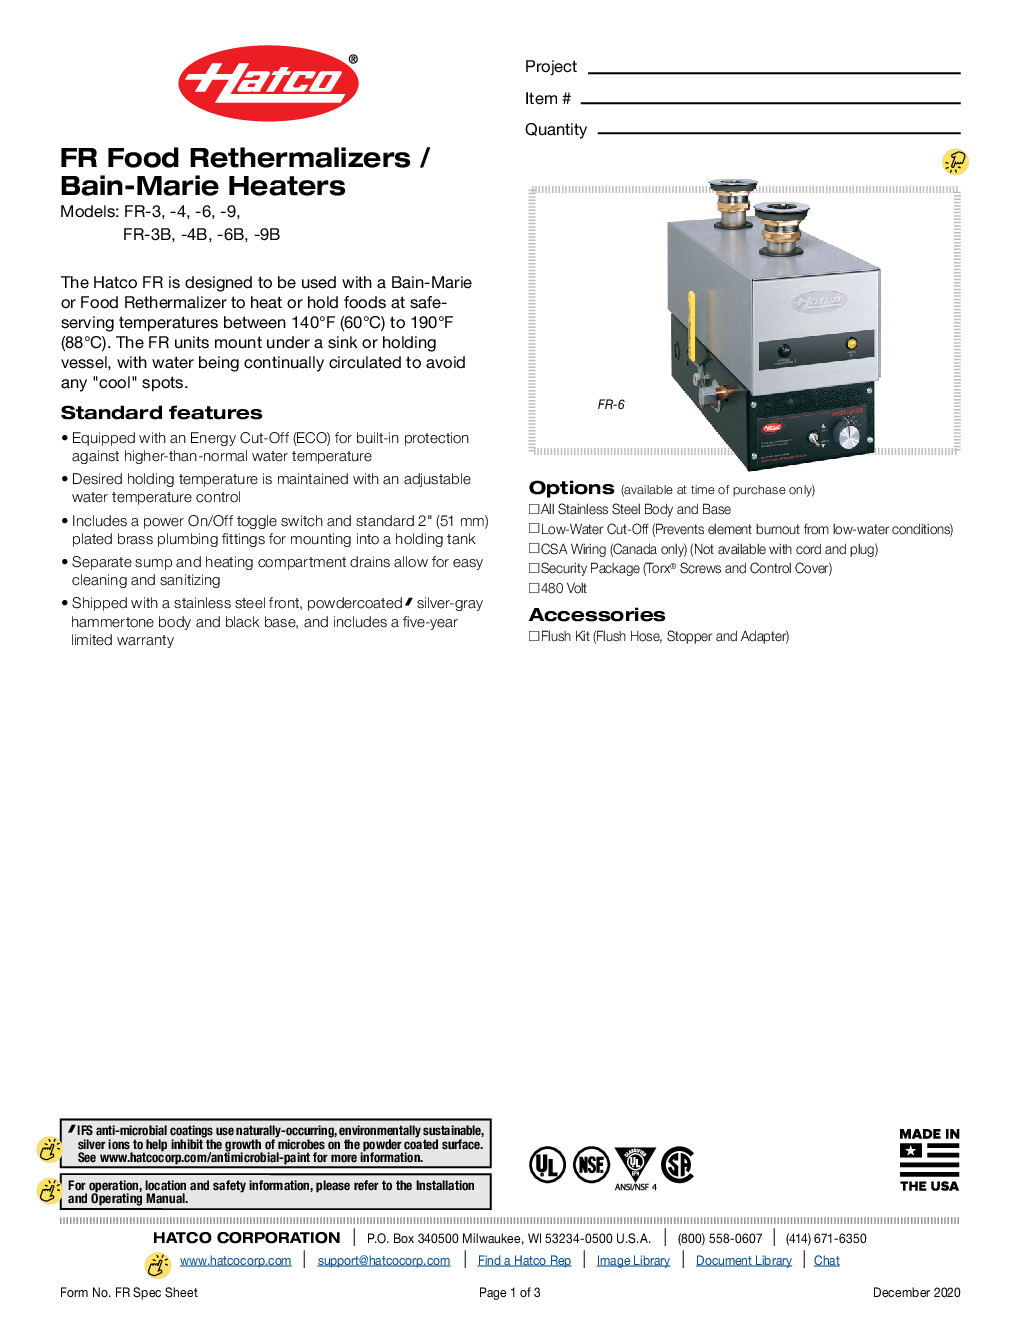 Hatco FR-QS Food Rethermalizers / Bain-Marie Heaters